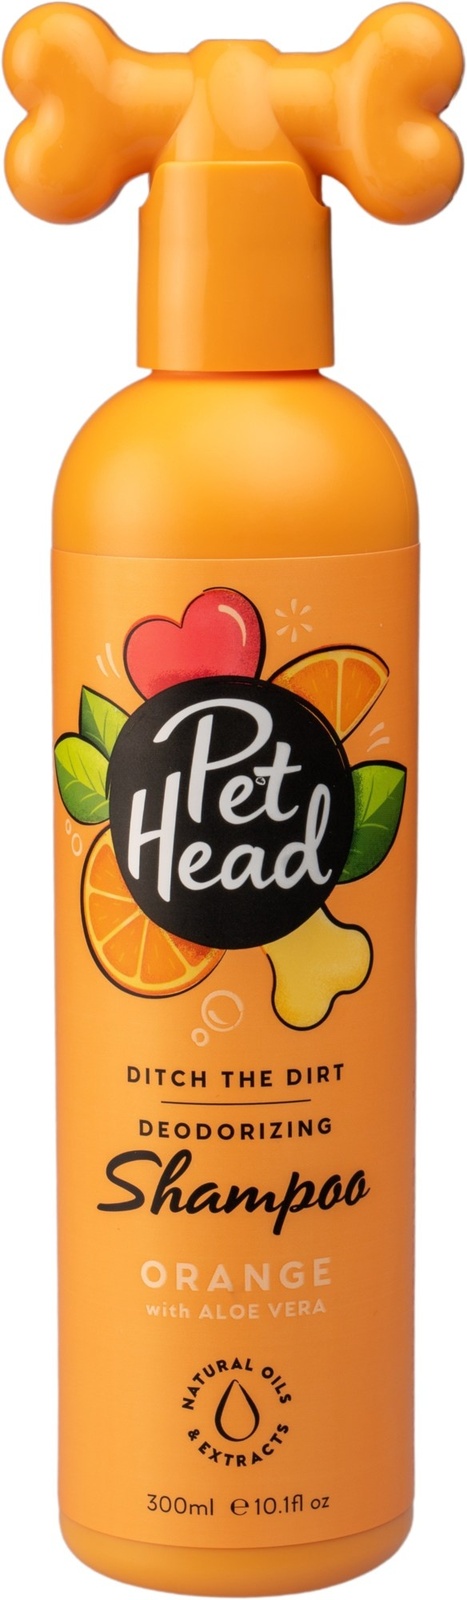 Pet Head шампунь дезодорирующий 